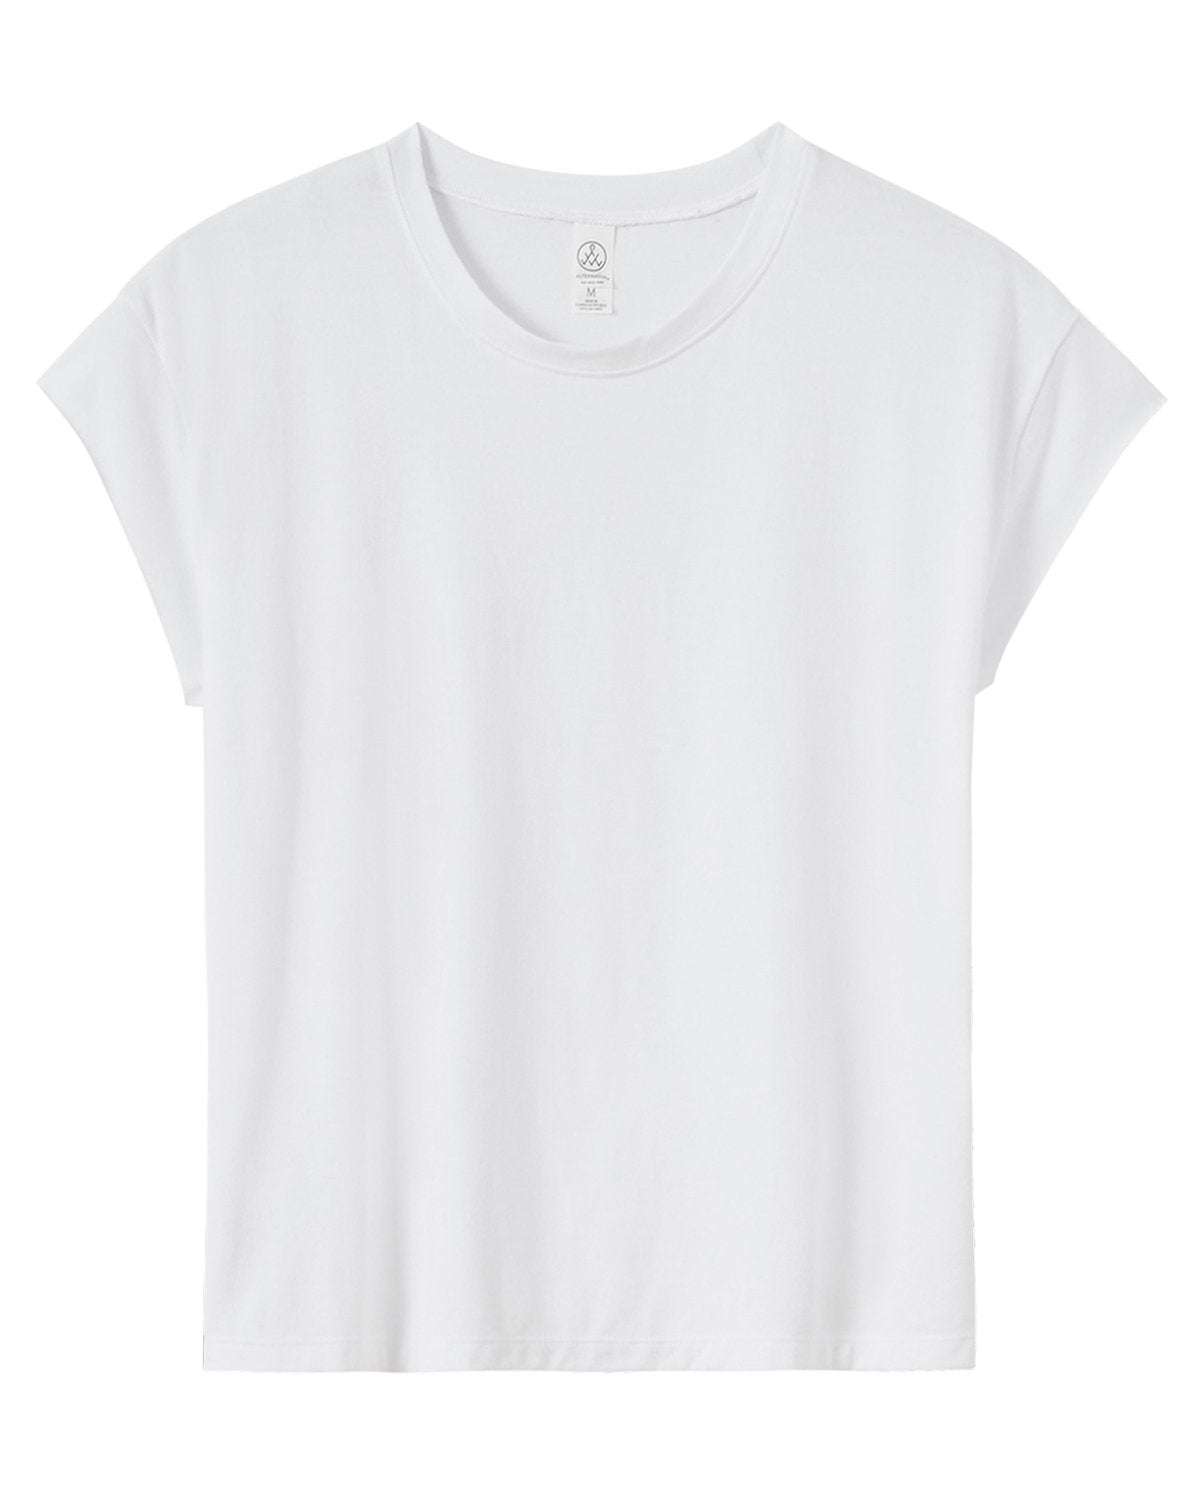 Alternative Ladies' Modal Tri-Blend Raw Edge Muscle T-Shirt, White